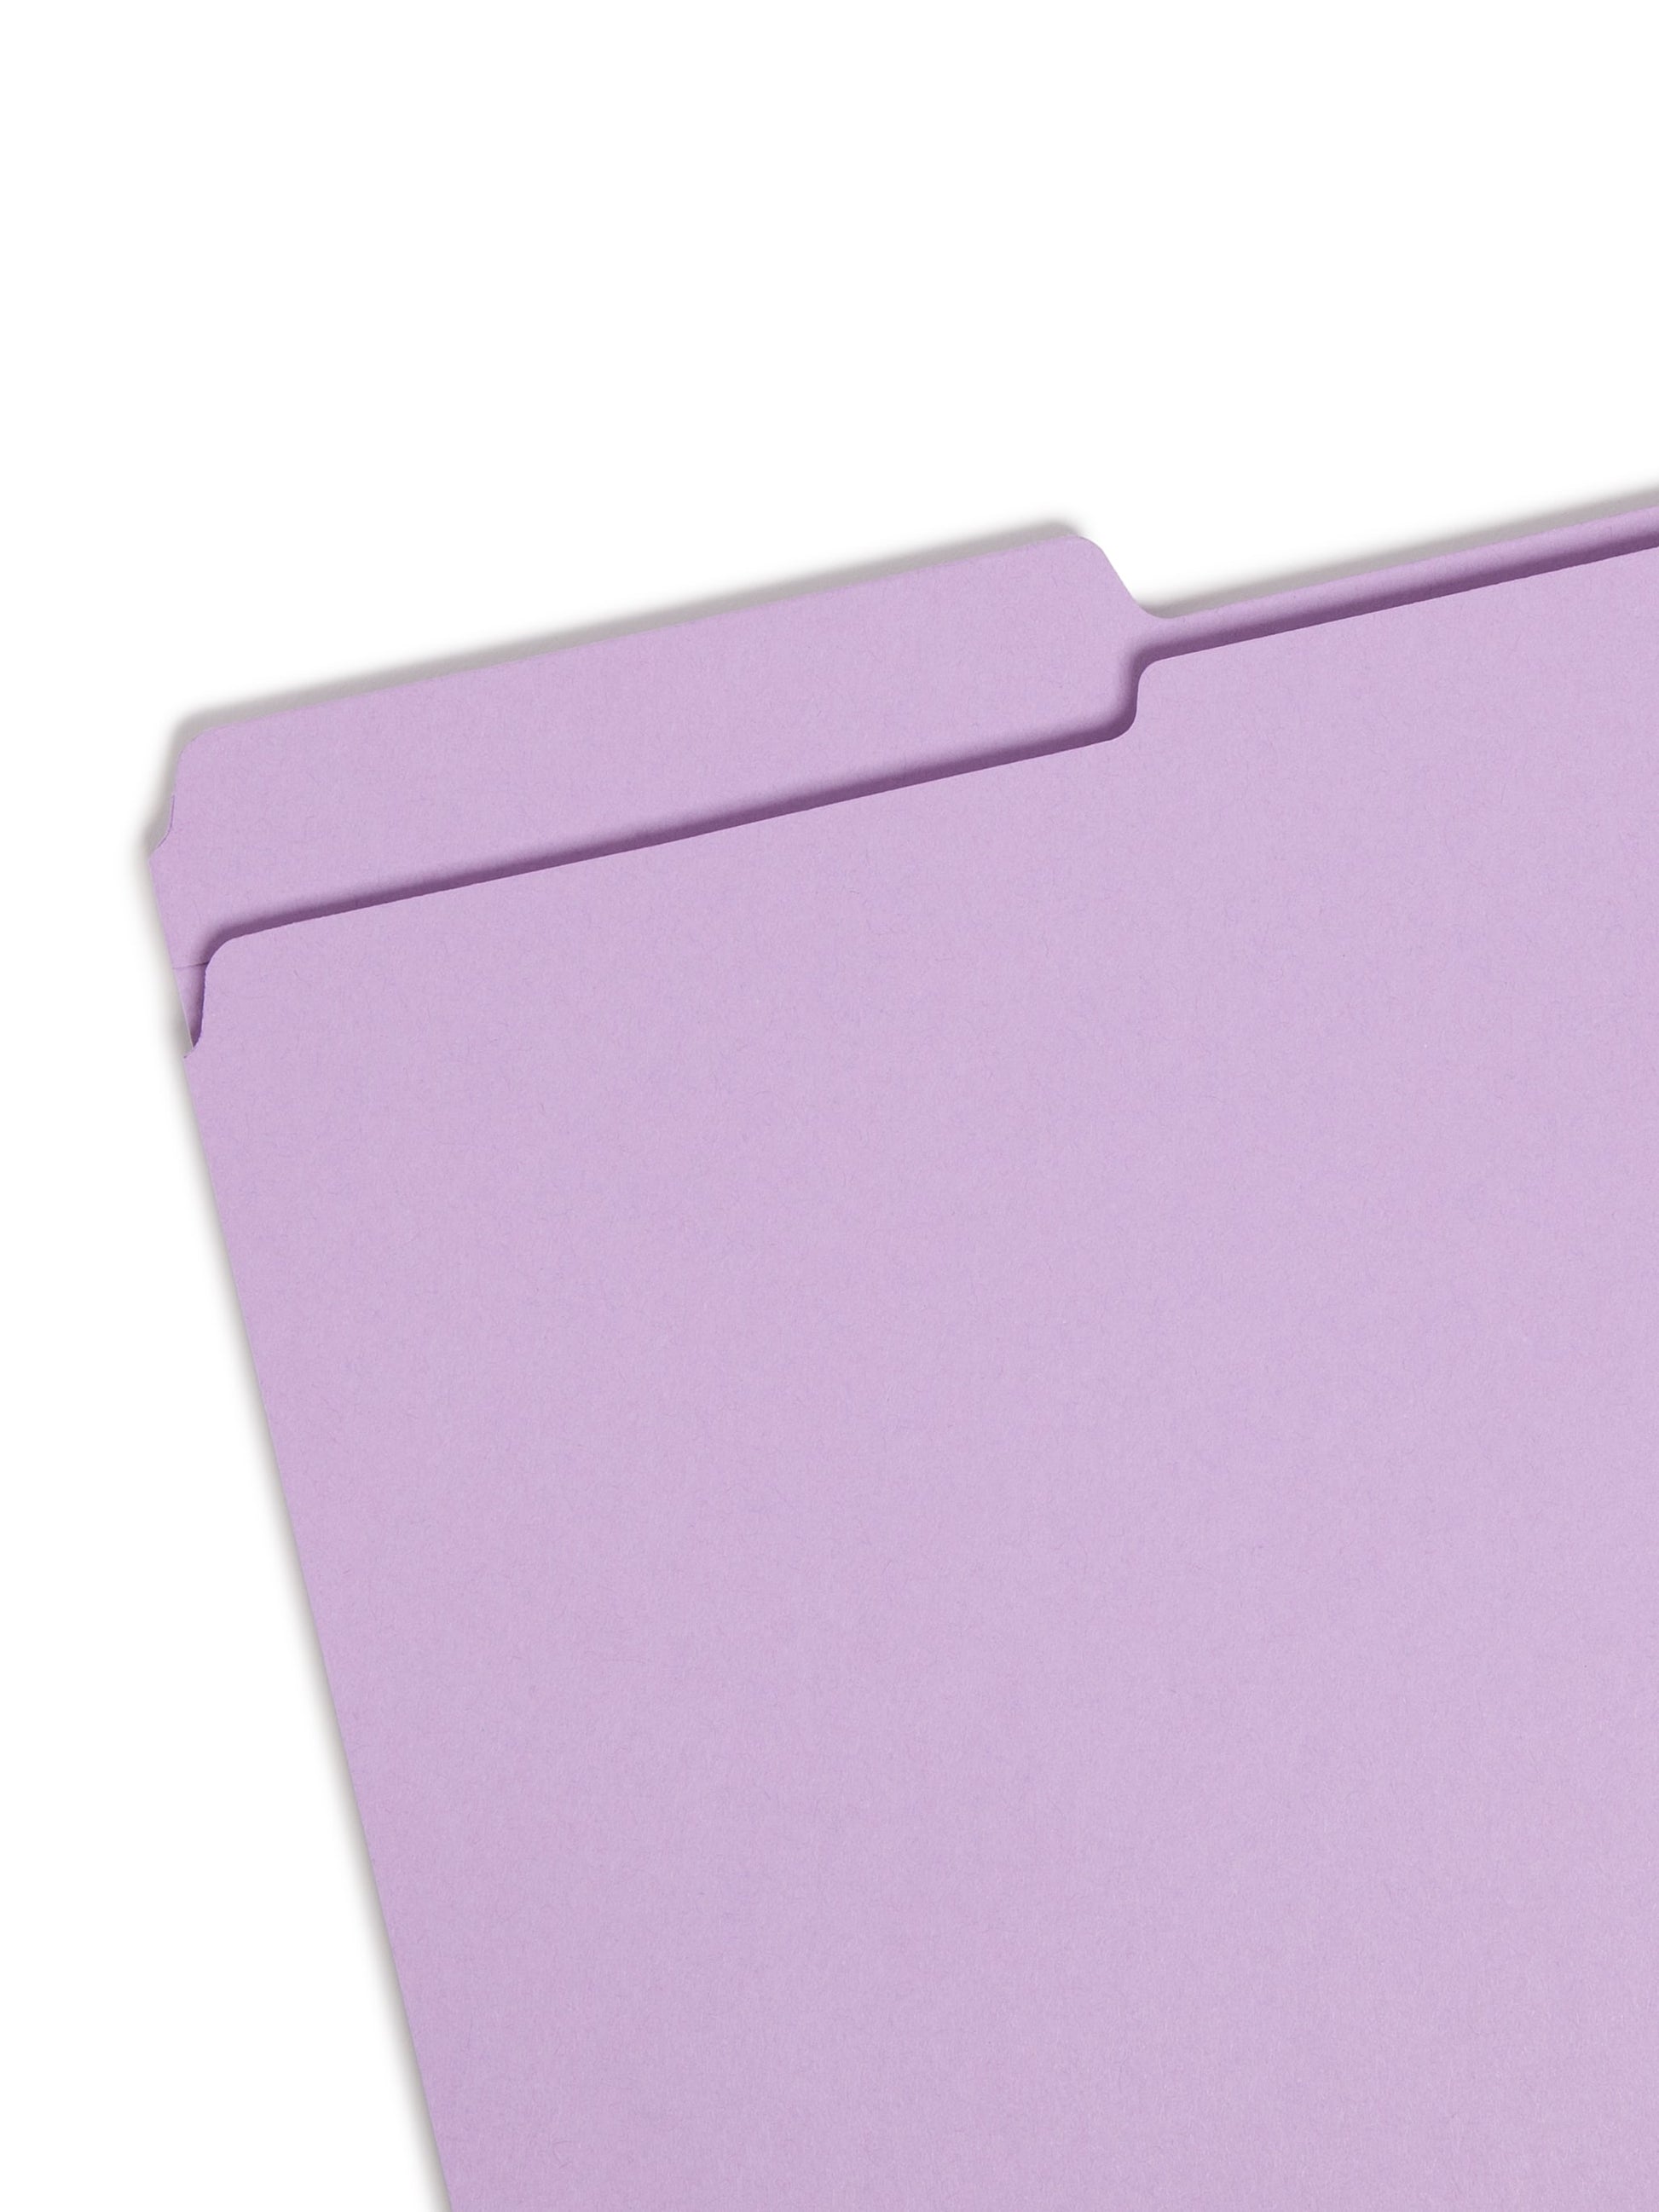 Reinforced Tab File Folders, 1/3-Cut Tab, Lavender Color, Legal Size, Set of 100, 086486174343